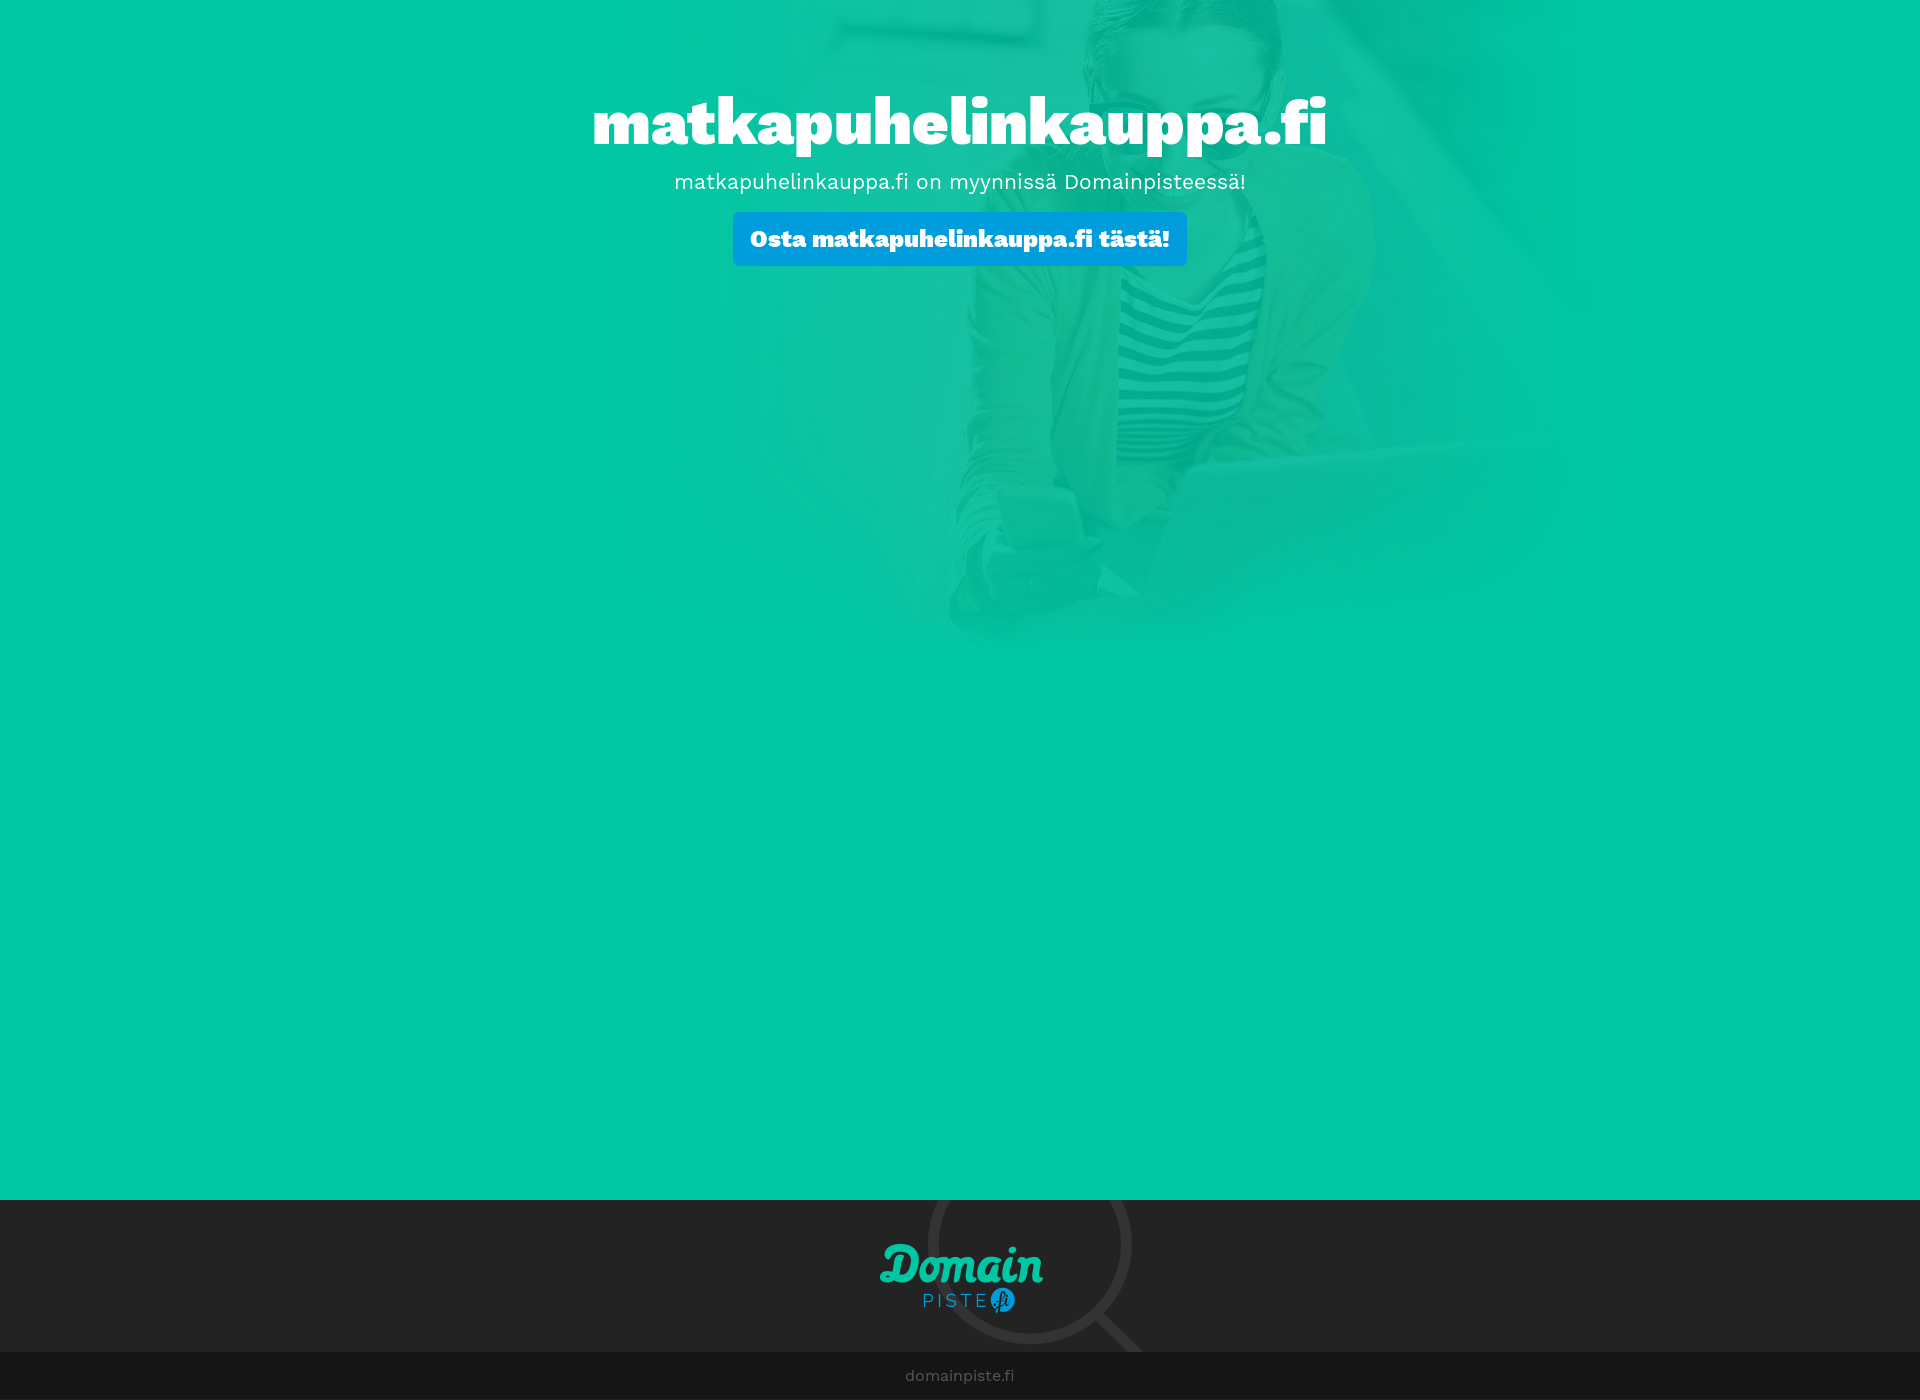 Skärmdump för matkapuhelinkauppa.fi